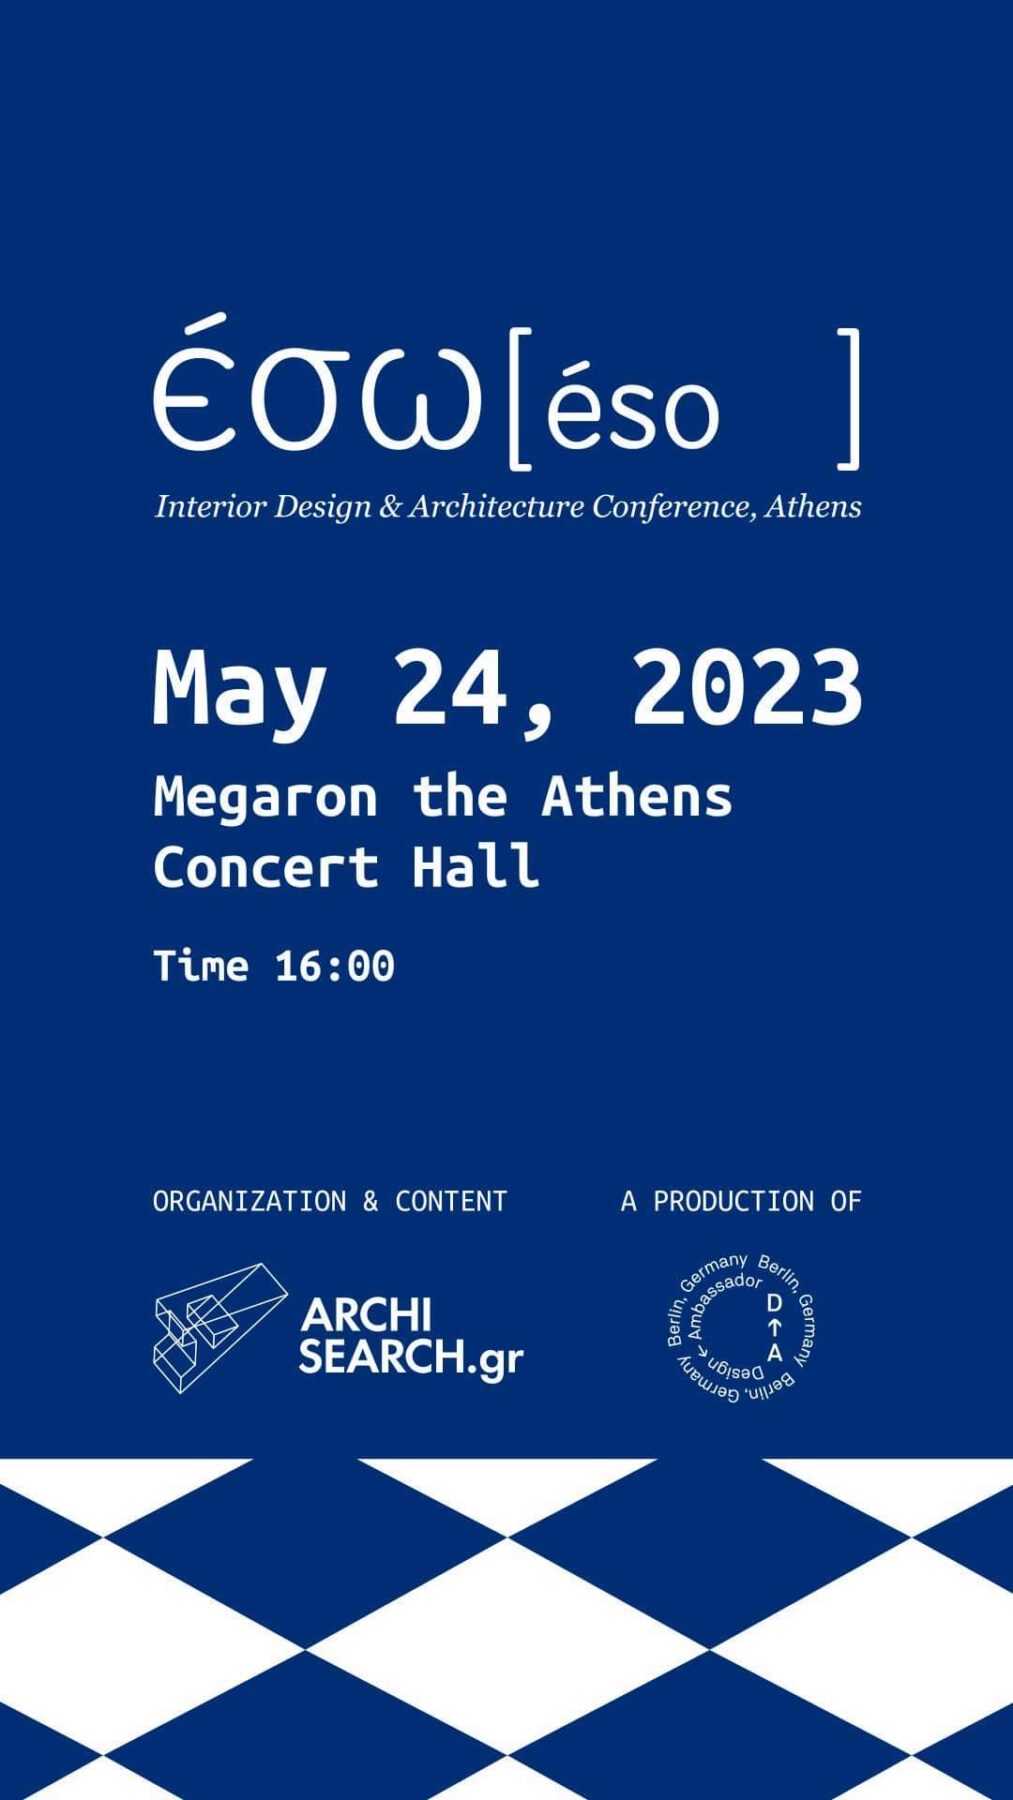 Archisearch ΕΣΩ 2023 // MULTIVERSE: η 11η διοργάνωση της μεγαλύτερης γιορτής για την αρχιτεκτονική και το design έρχεται στις 24 Μαΐου στην Αίθουσα Τριάντη του Μεγάρου Μουσικής Αθηνών